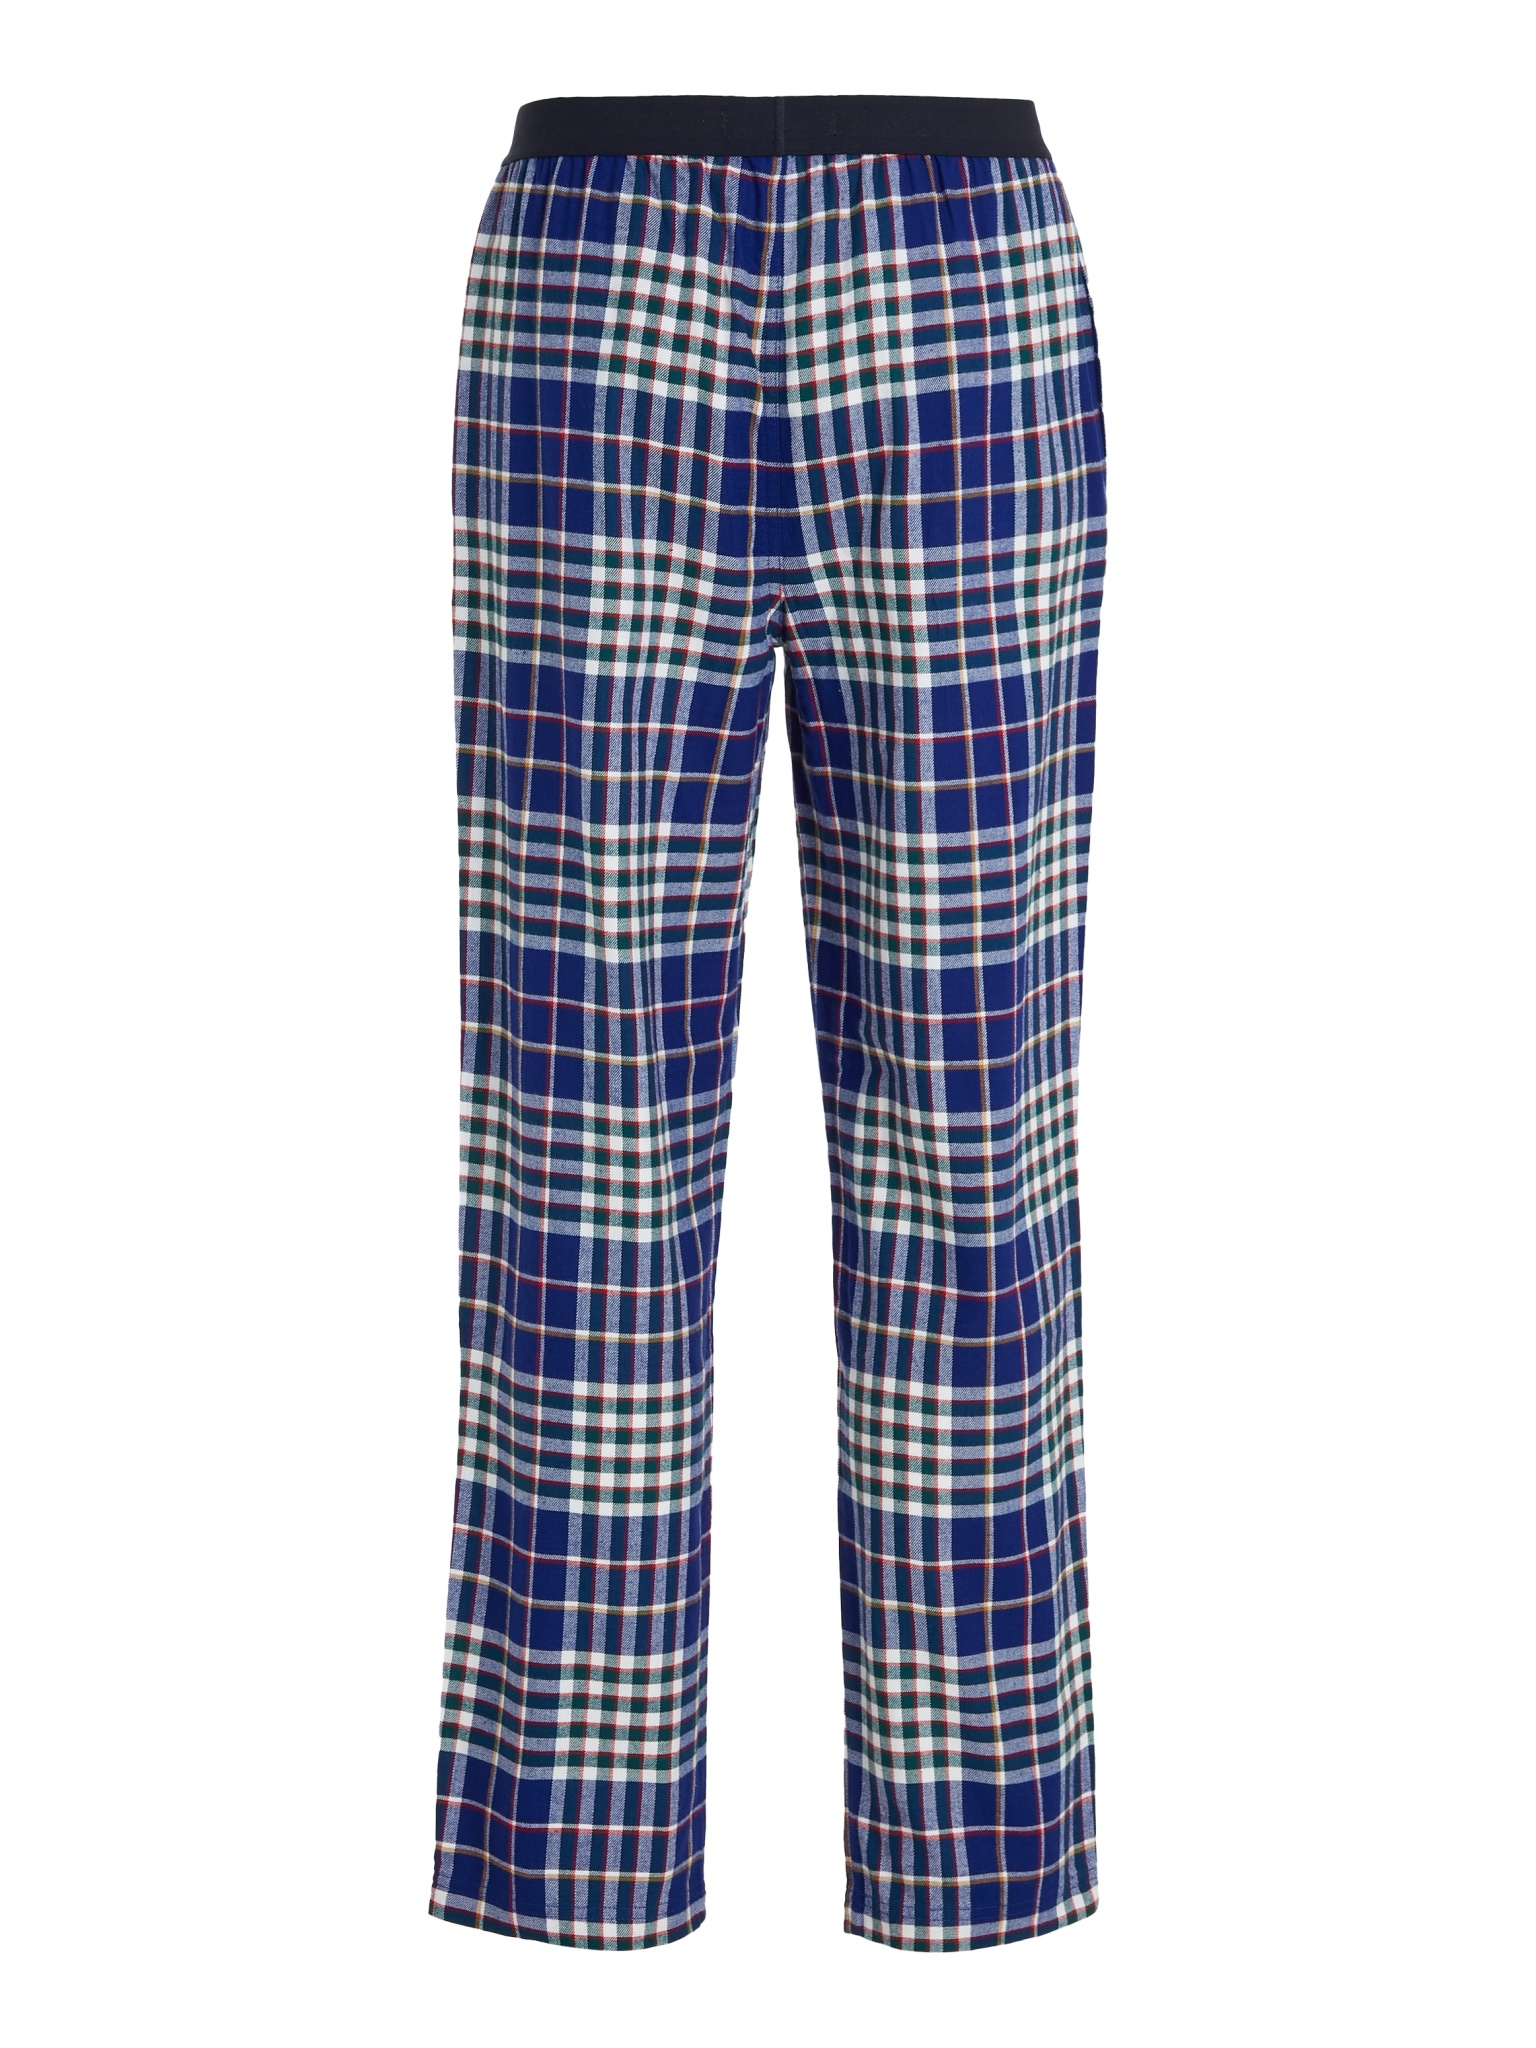 TOMMY HILFIGER Pyjama-Hose 10716386 kaufen | WÖHRL